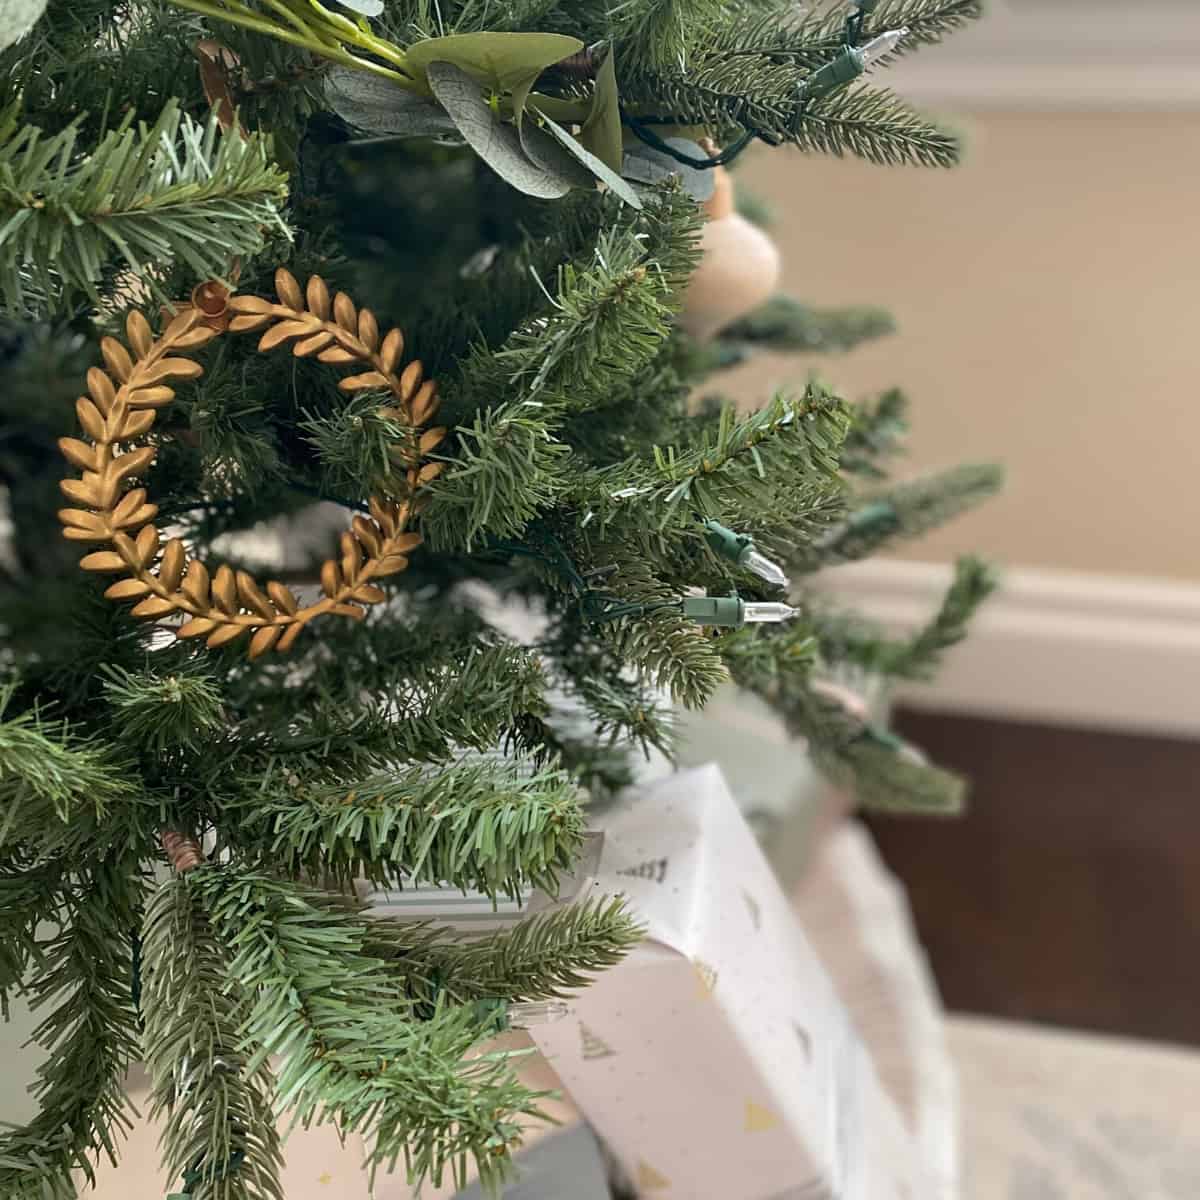 Brass laurel wreath Christmas ornament hangs above neutral presents